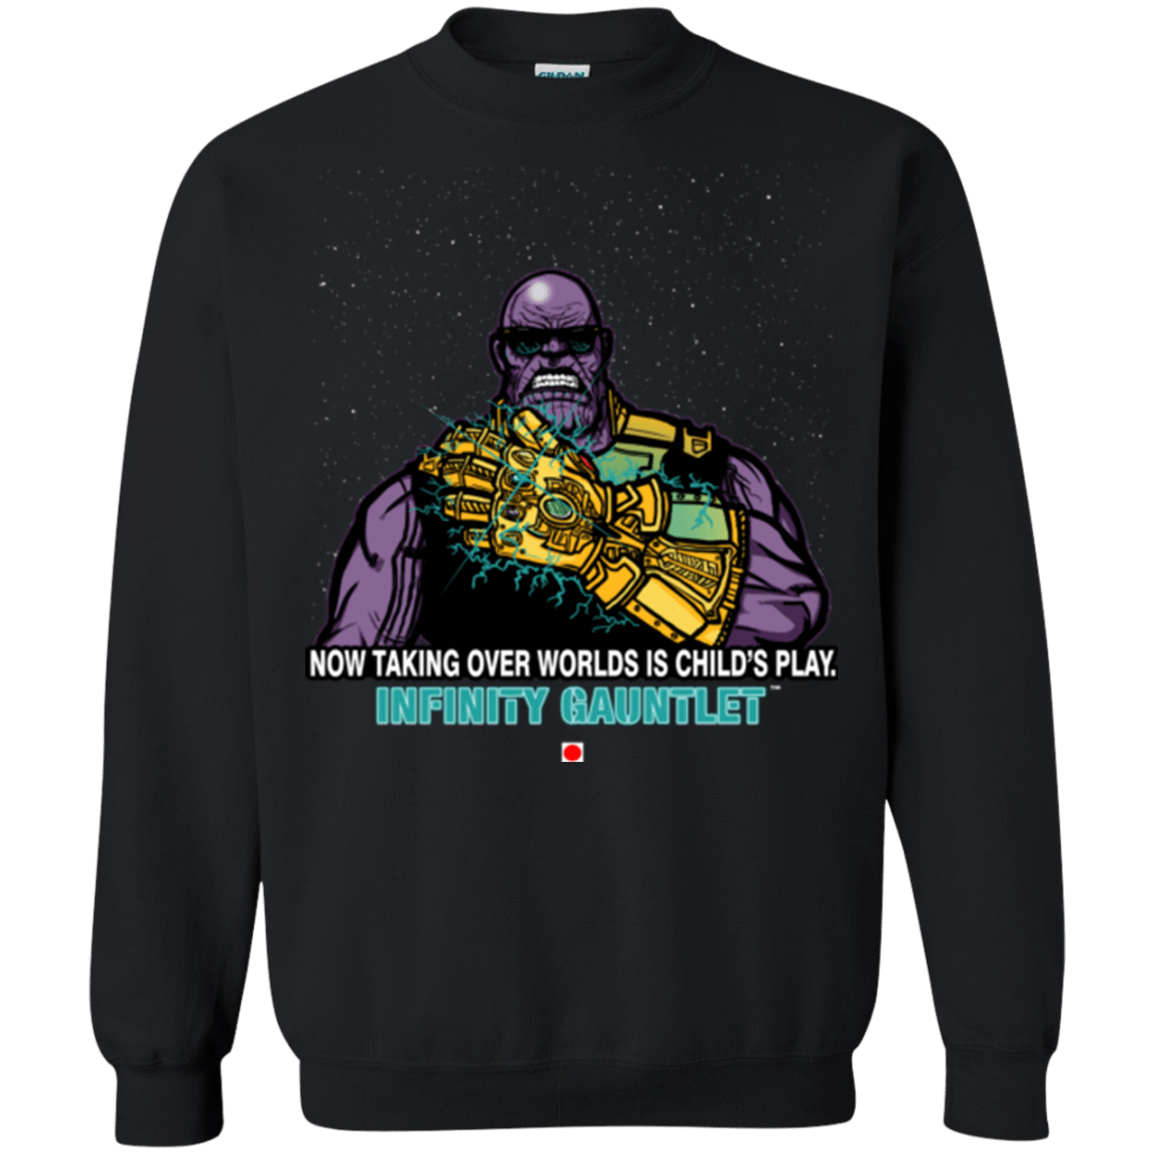 Sweatshirts Black / S Infinity Gear Crewneck Sweatshirt